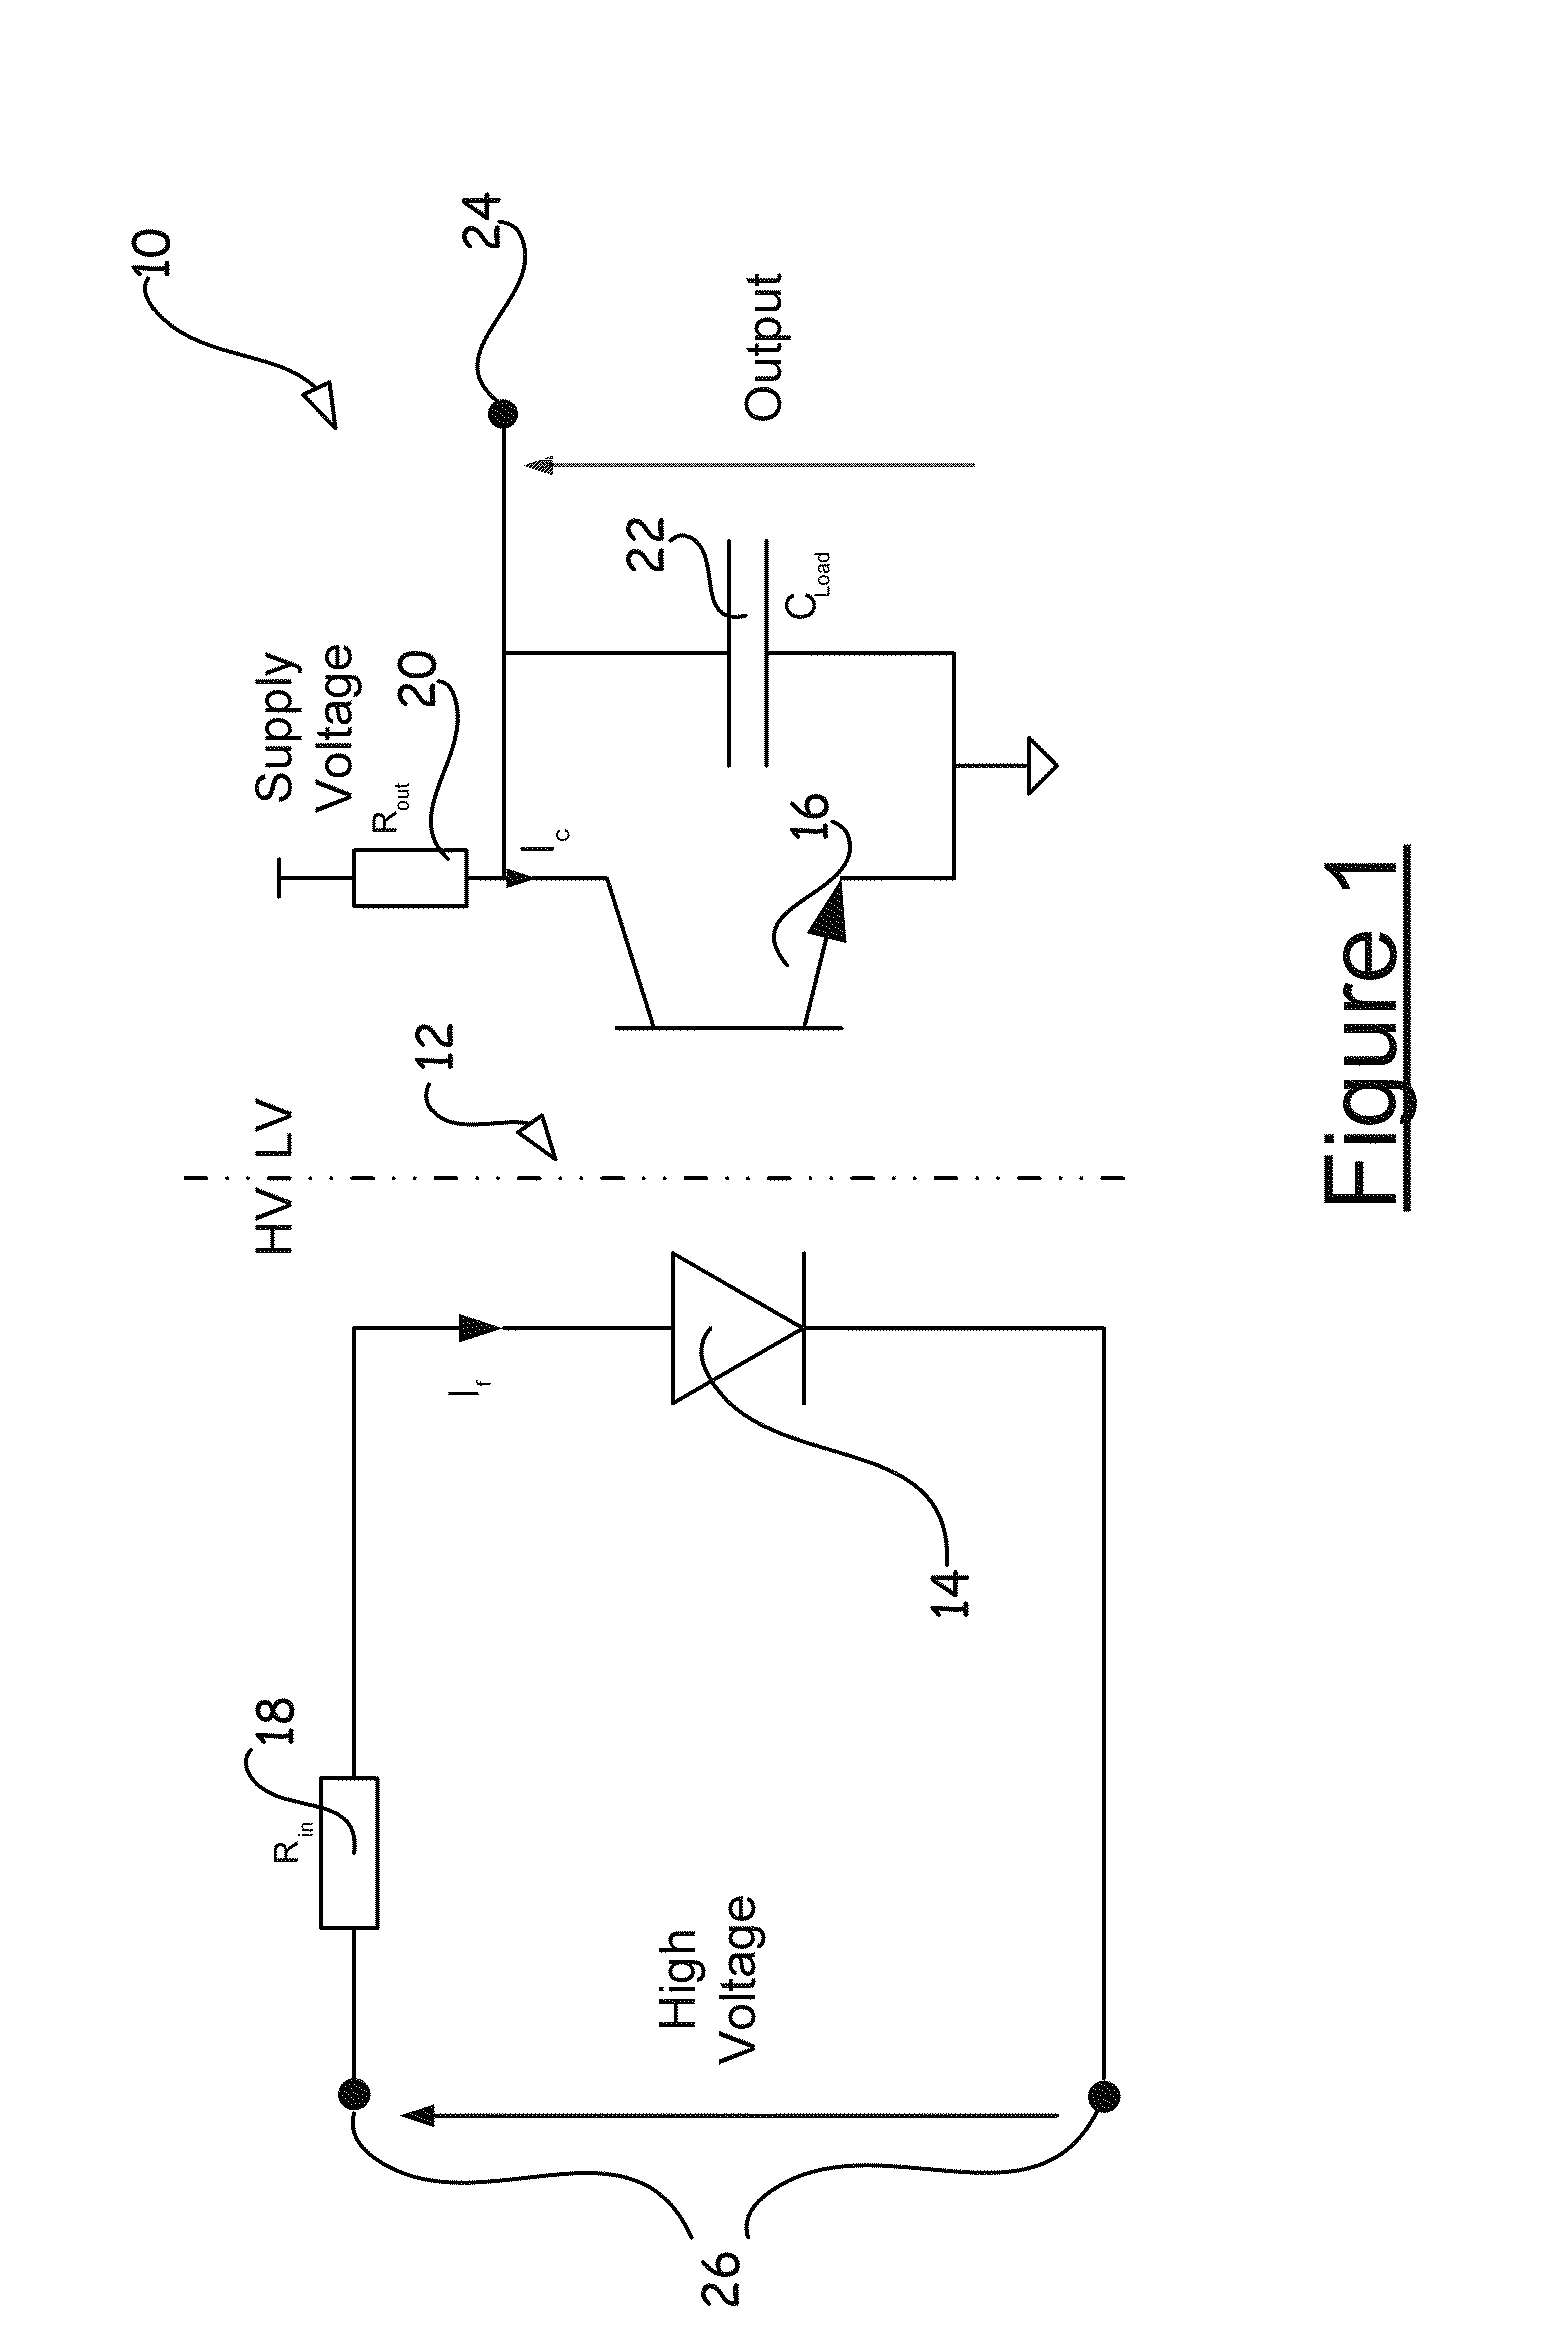 Signal level crossing detector circuit